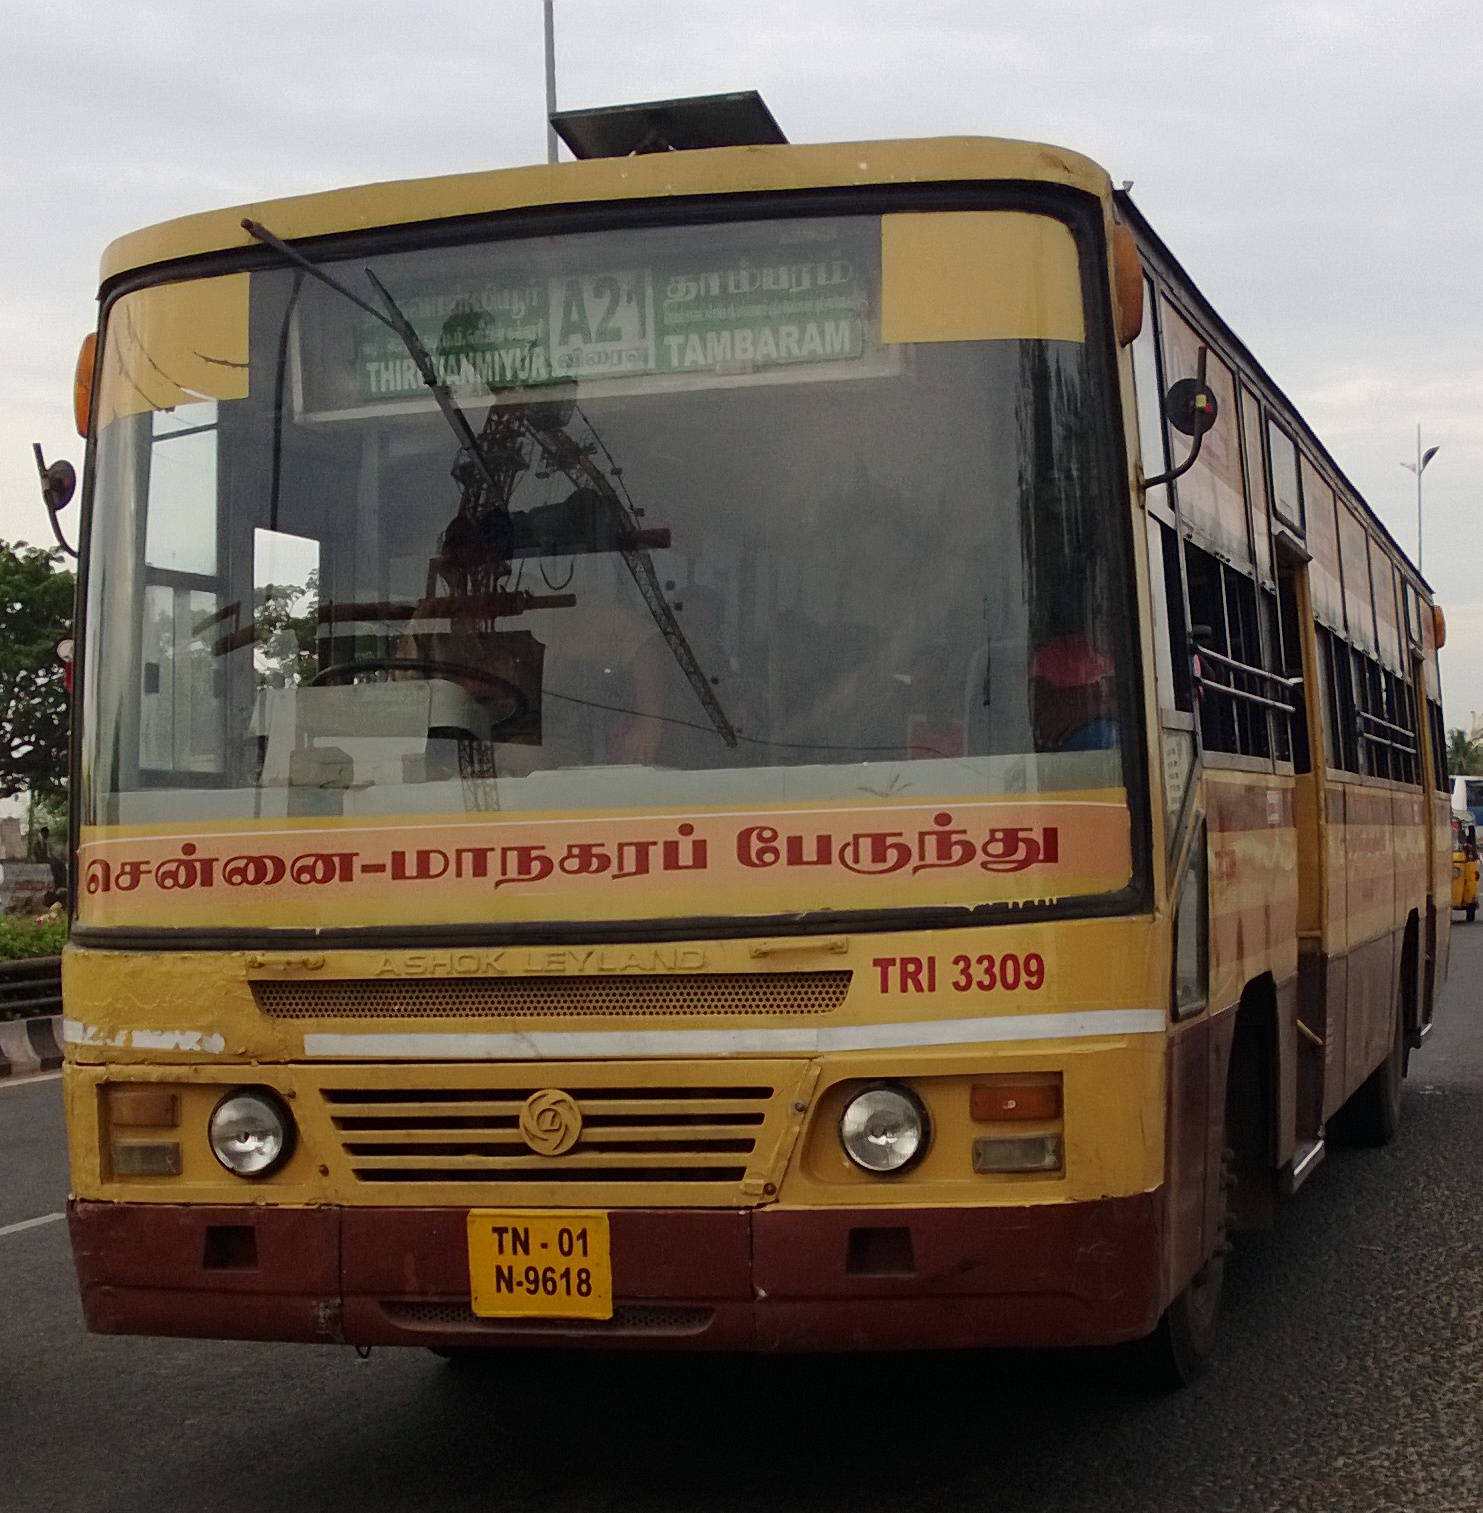 MTC - Metropolitan Transport Corporation, Chennai - ContactNumbers.In